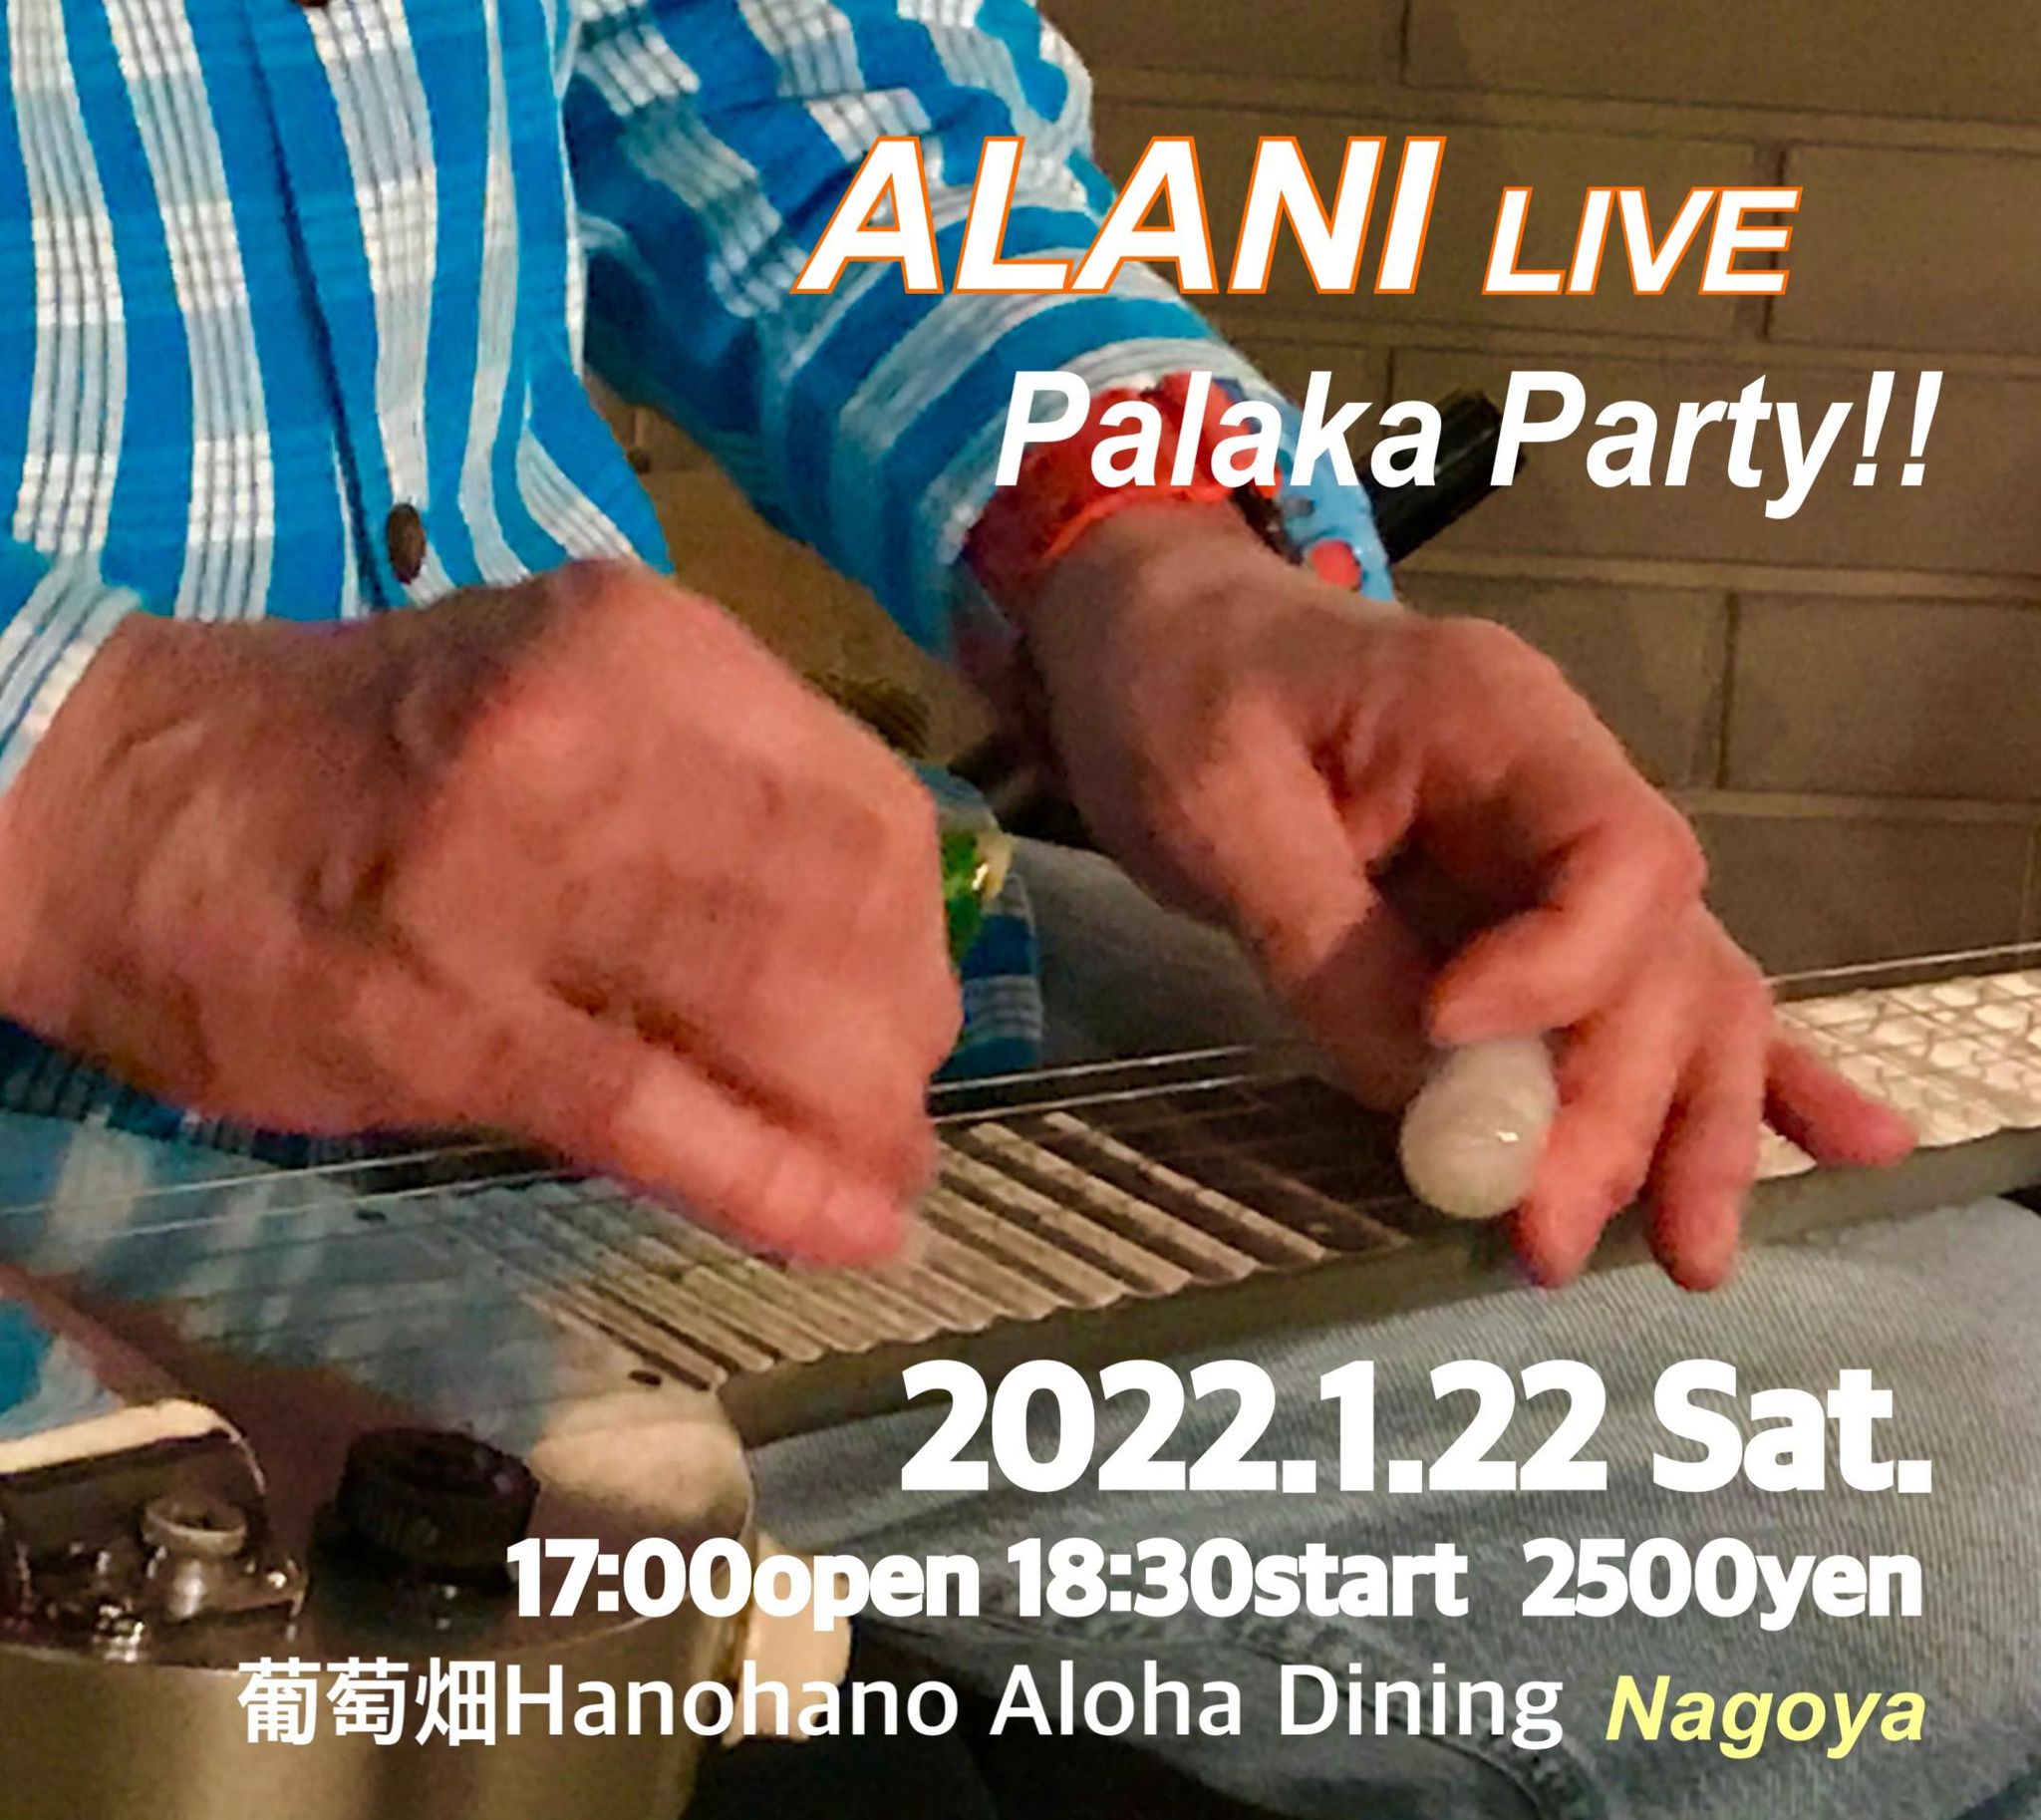 愛知 第25回 Palaka Party in 名古屋 @ 葡萄畑 Hanohano Aloha Dining | 名古屋市 | 愛知県 | 日本